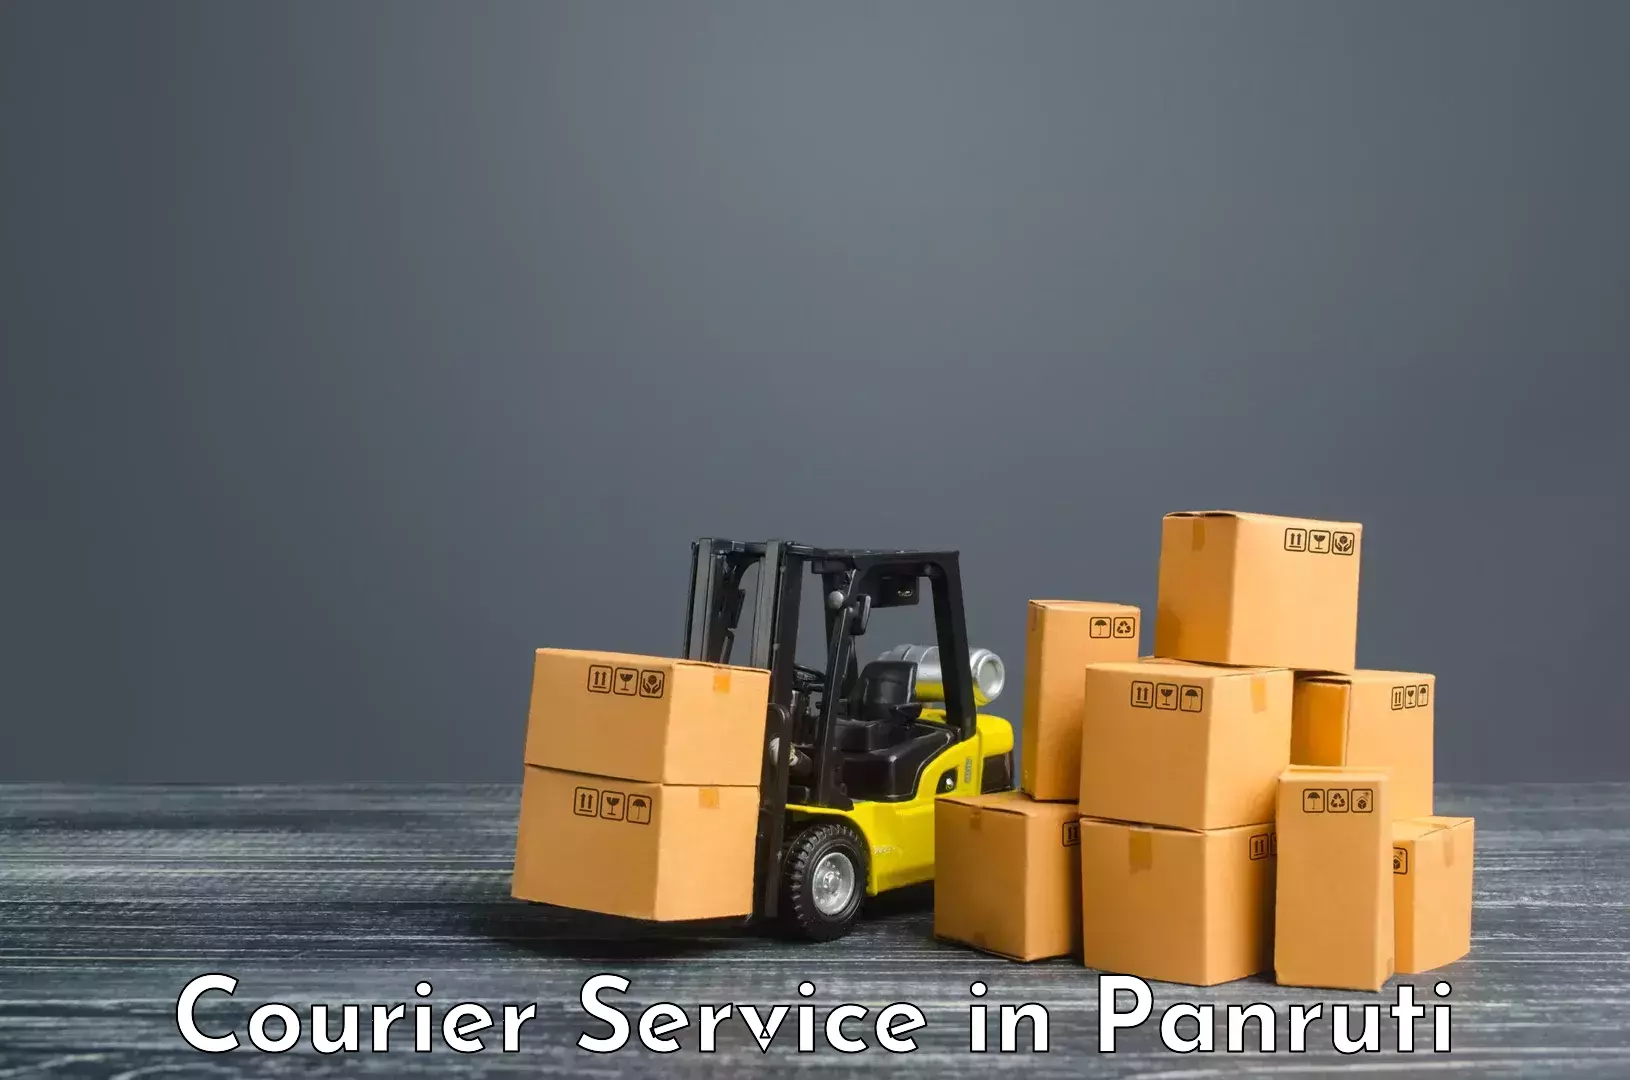 High-efficiency logistics in Panruti